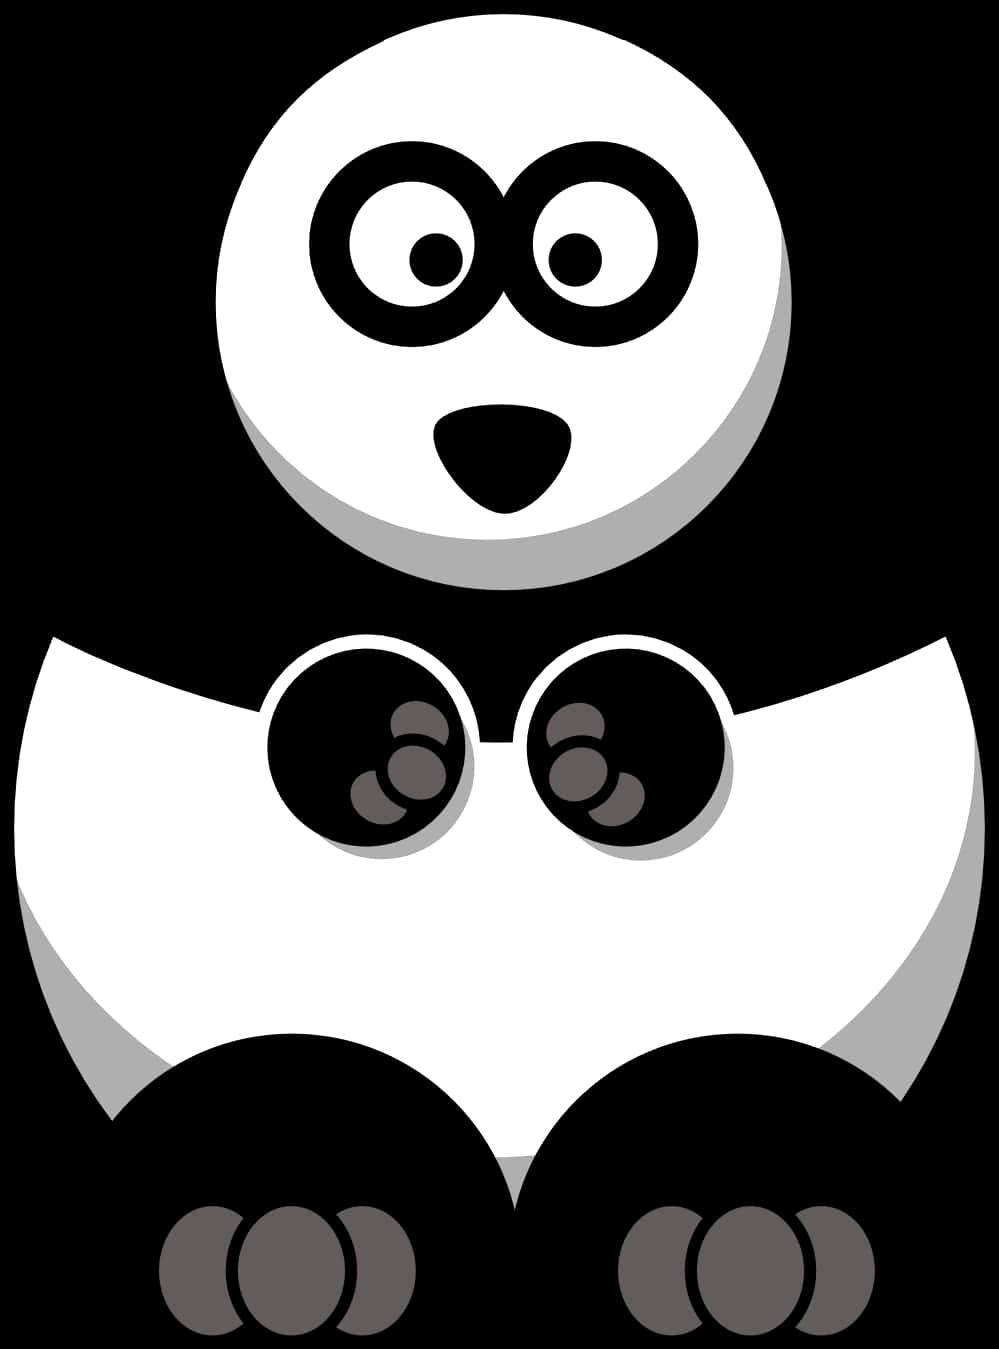 Abstract Panda Graphic PNG